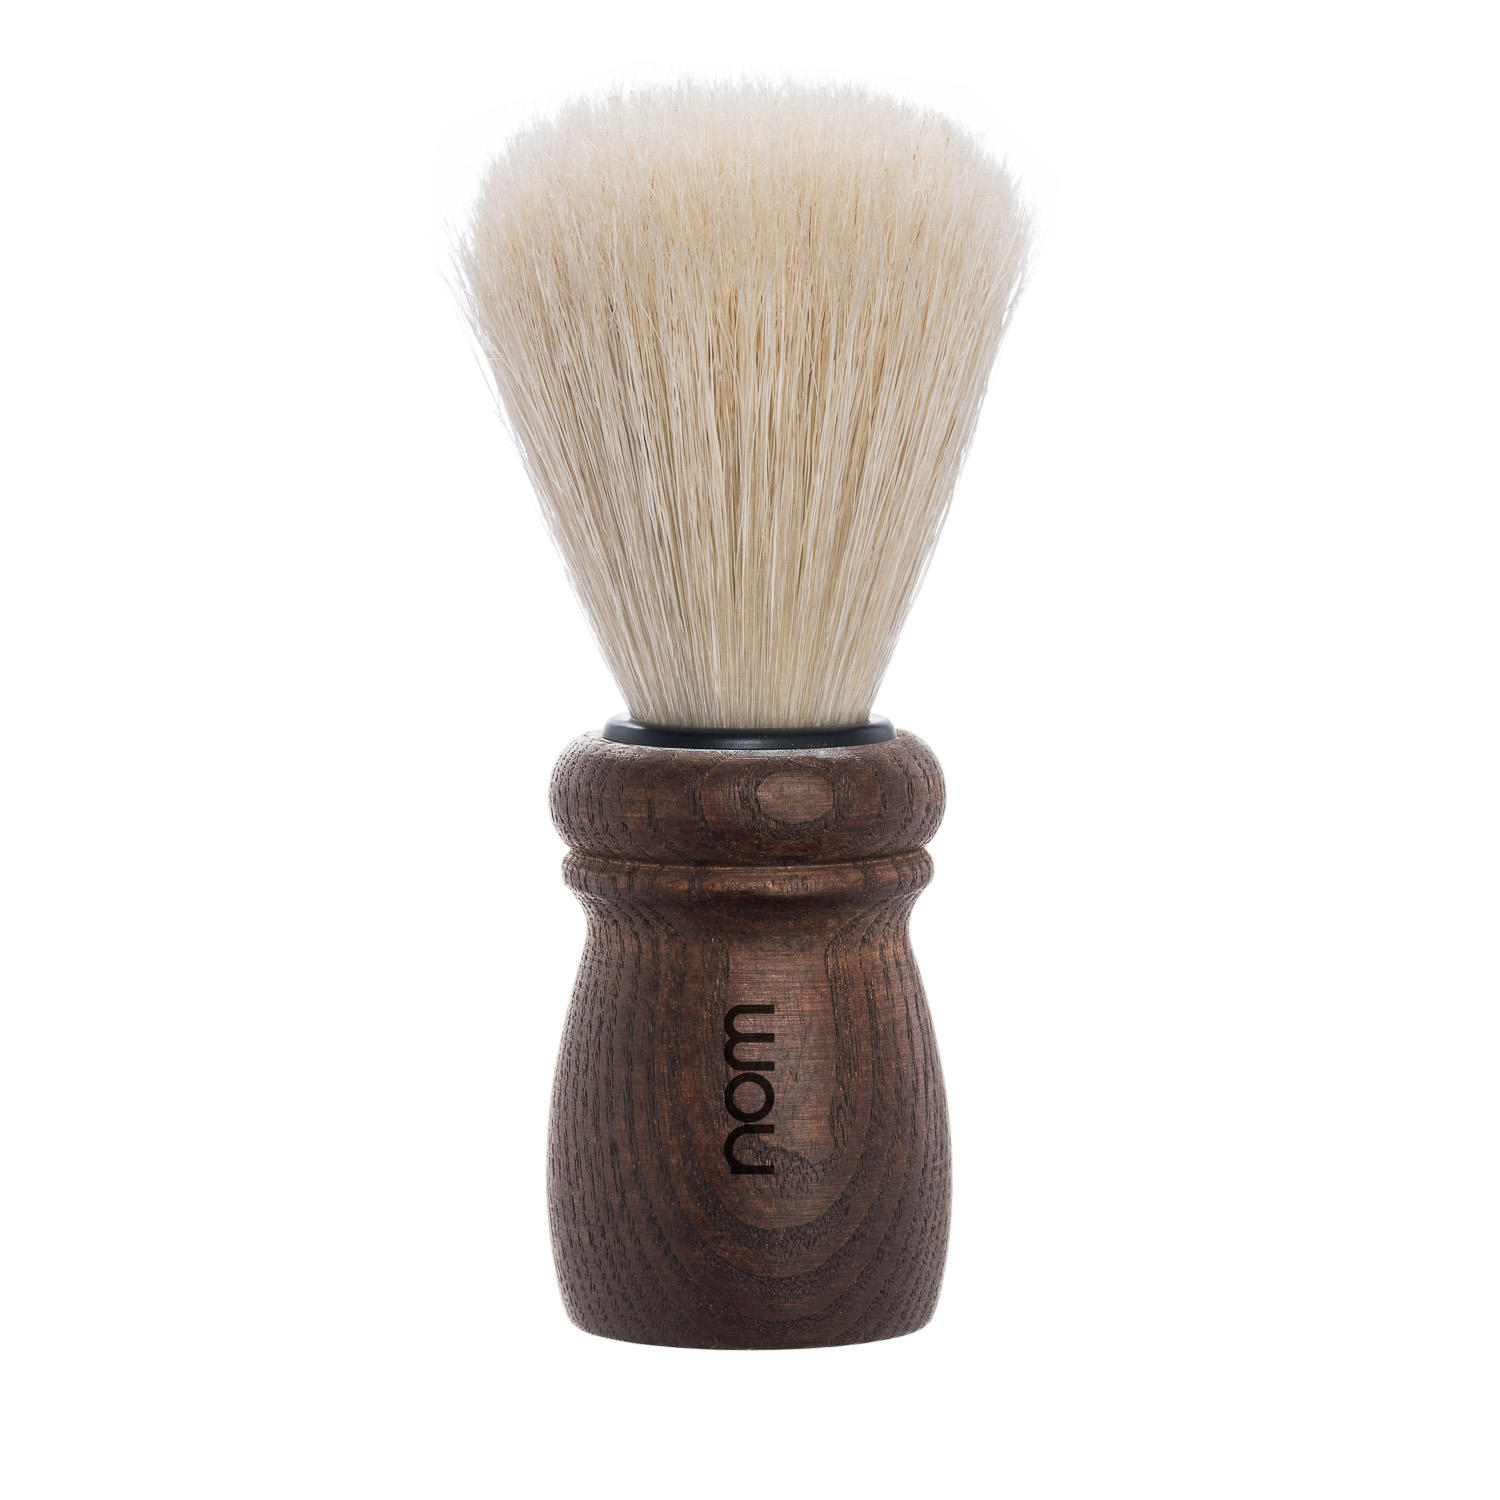 ALFRED15DA nom ALFRED, Dark Ash, Natural Bristle Shaving Brush